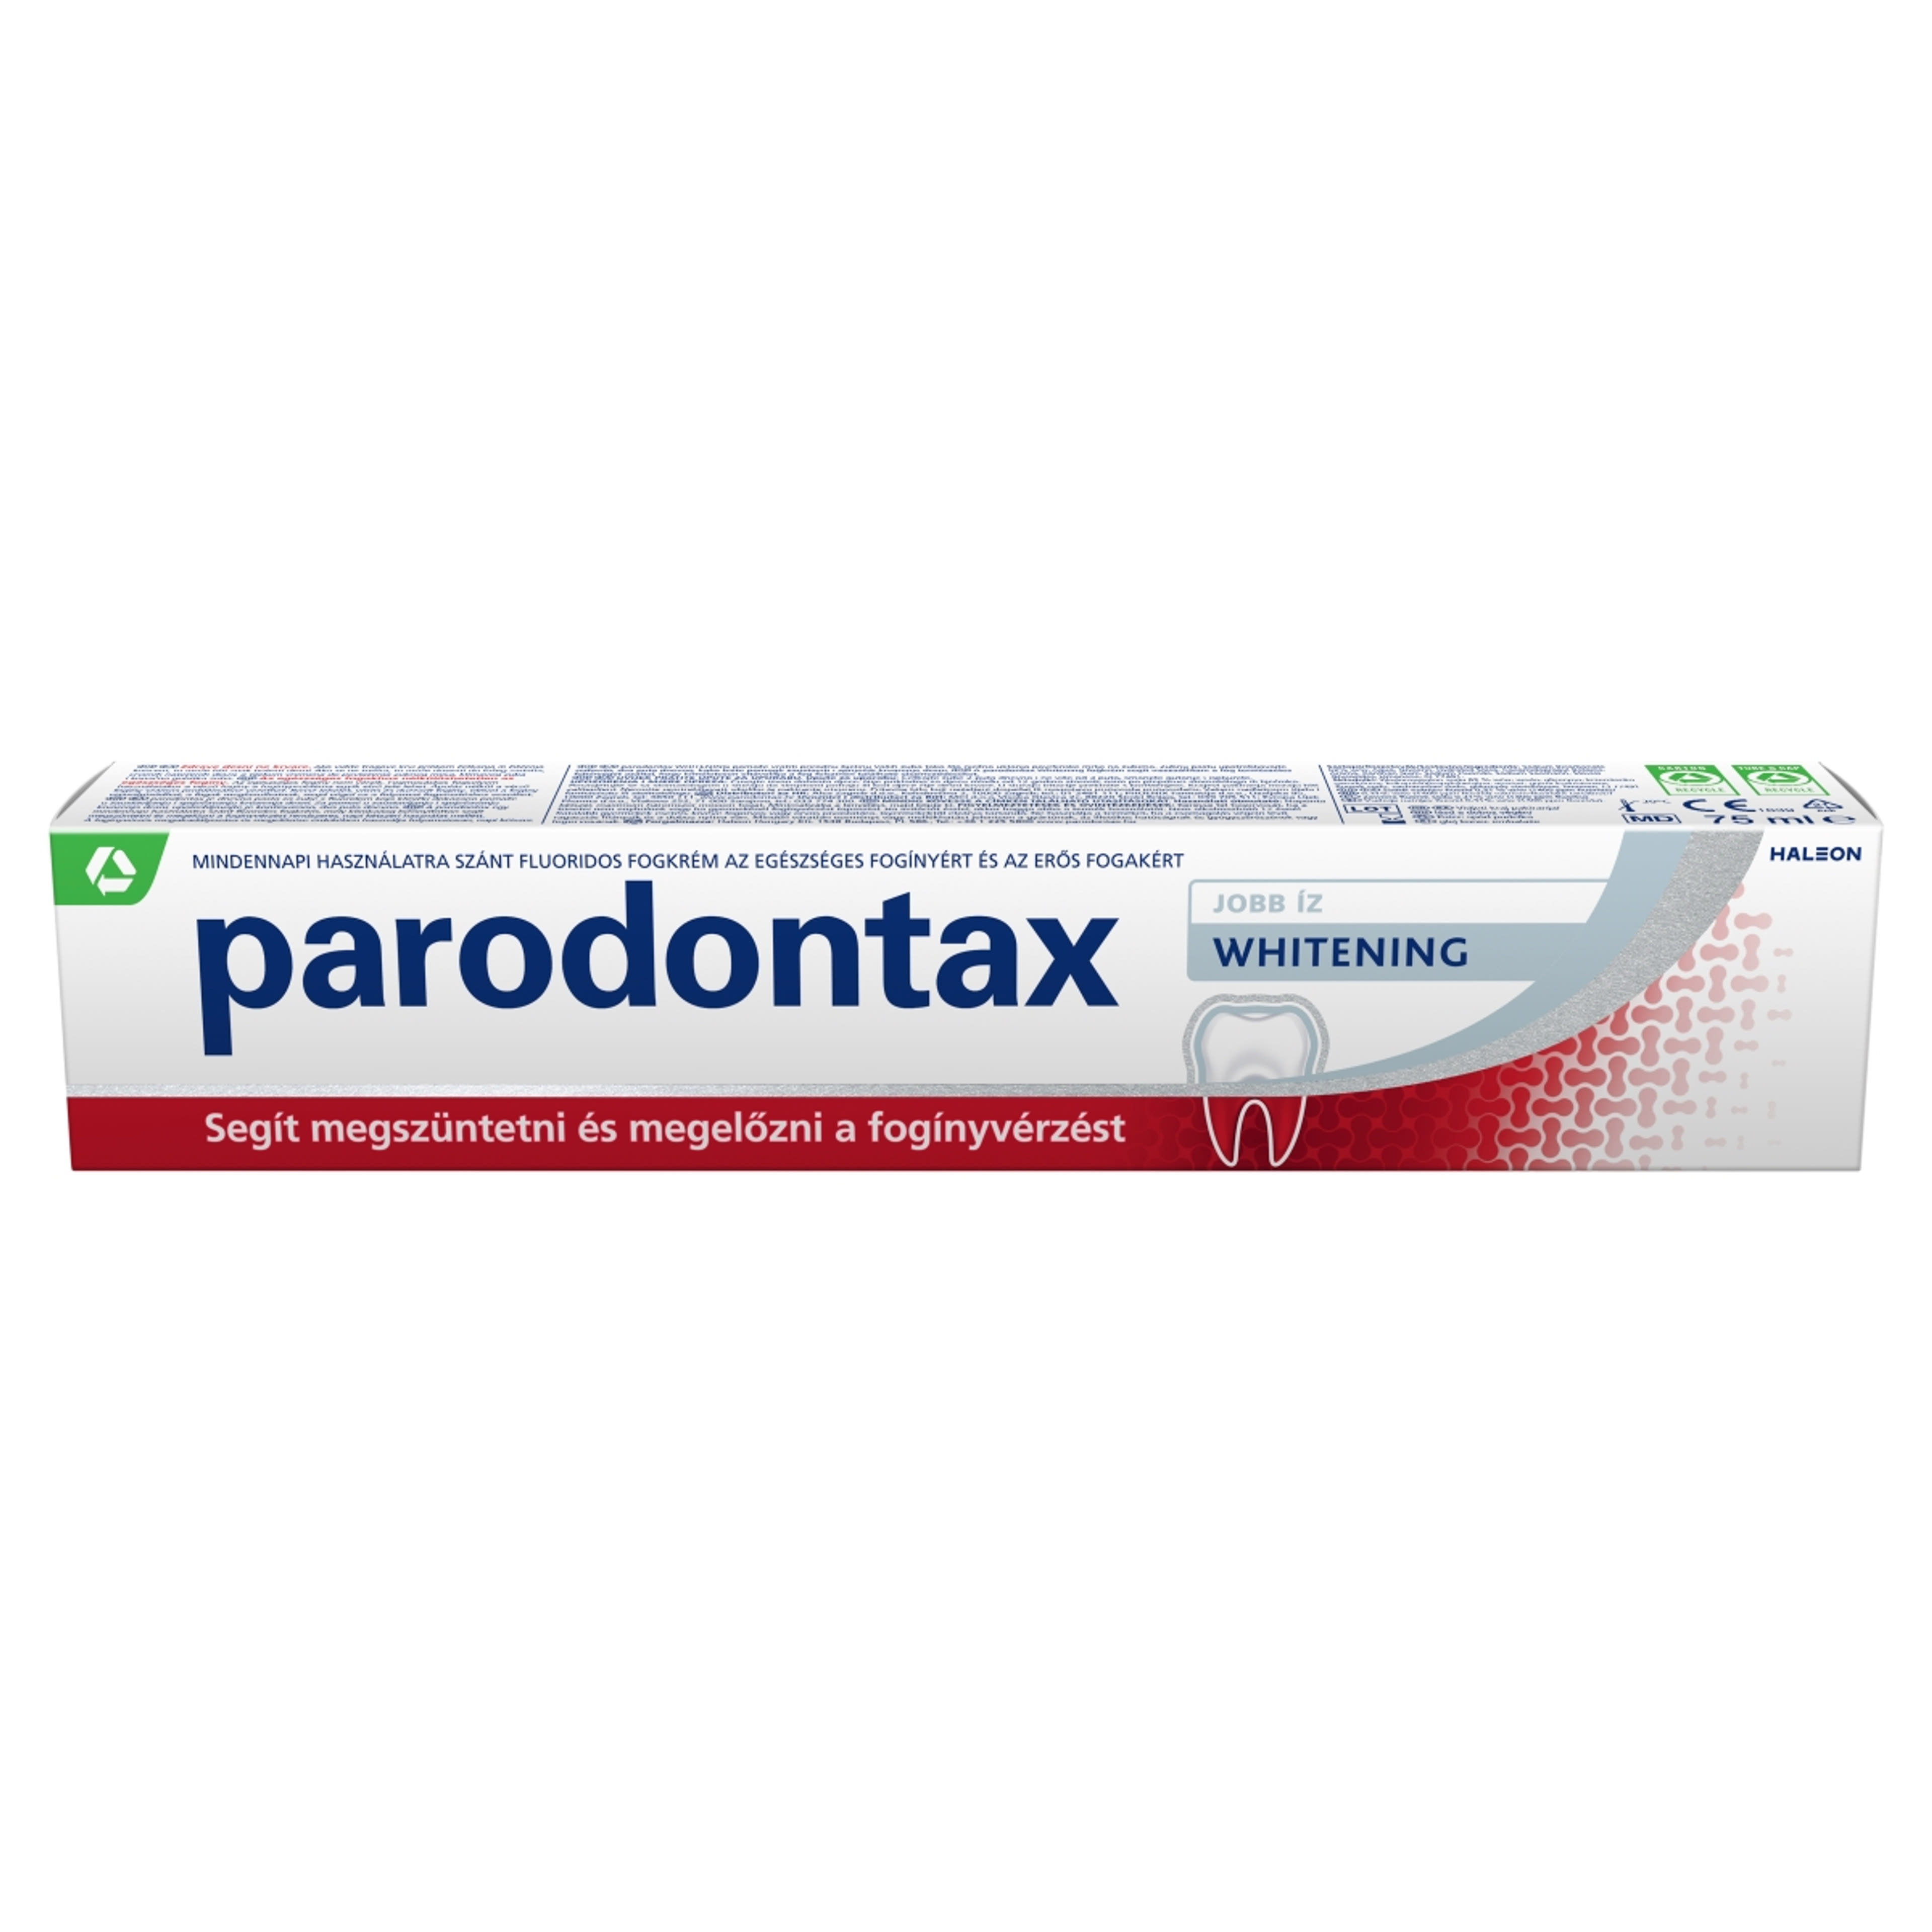 Parodontax Whitening fogkrém - 75 ml-1